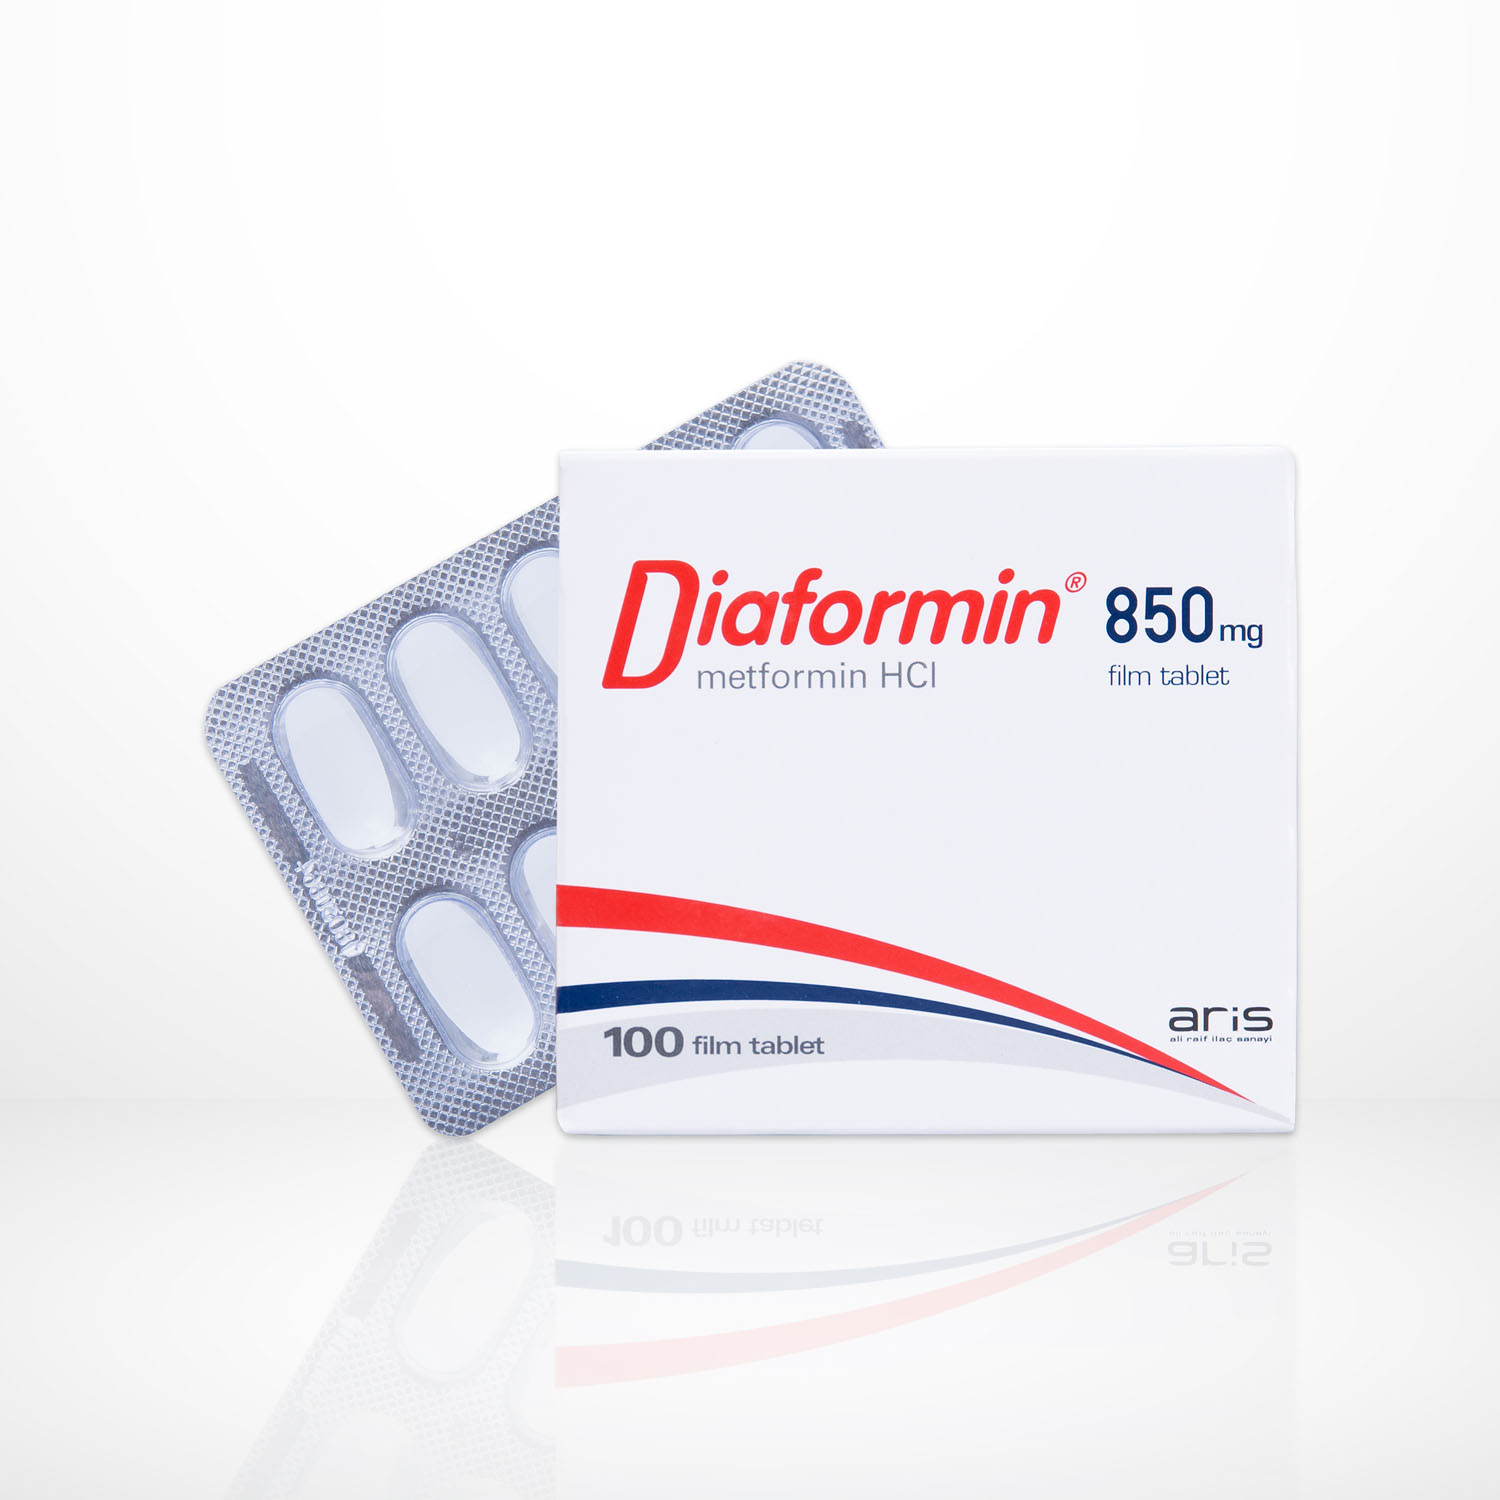 diaformin 850 mg 100 tab (metformin hydrochloride)